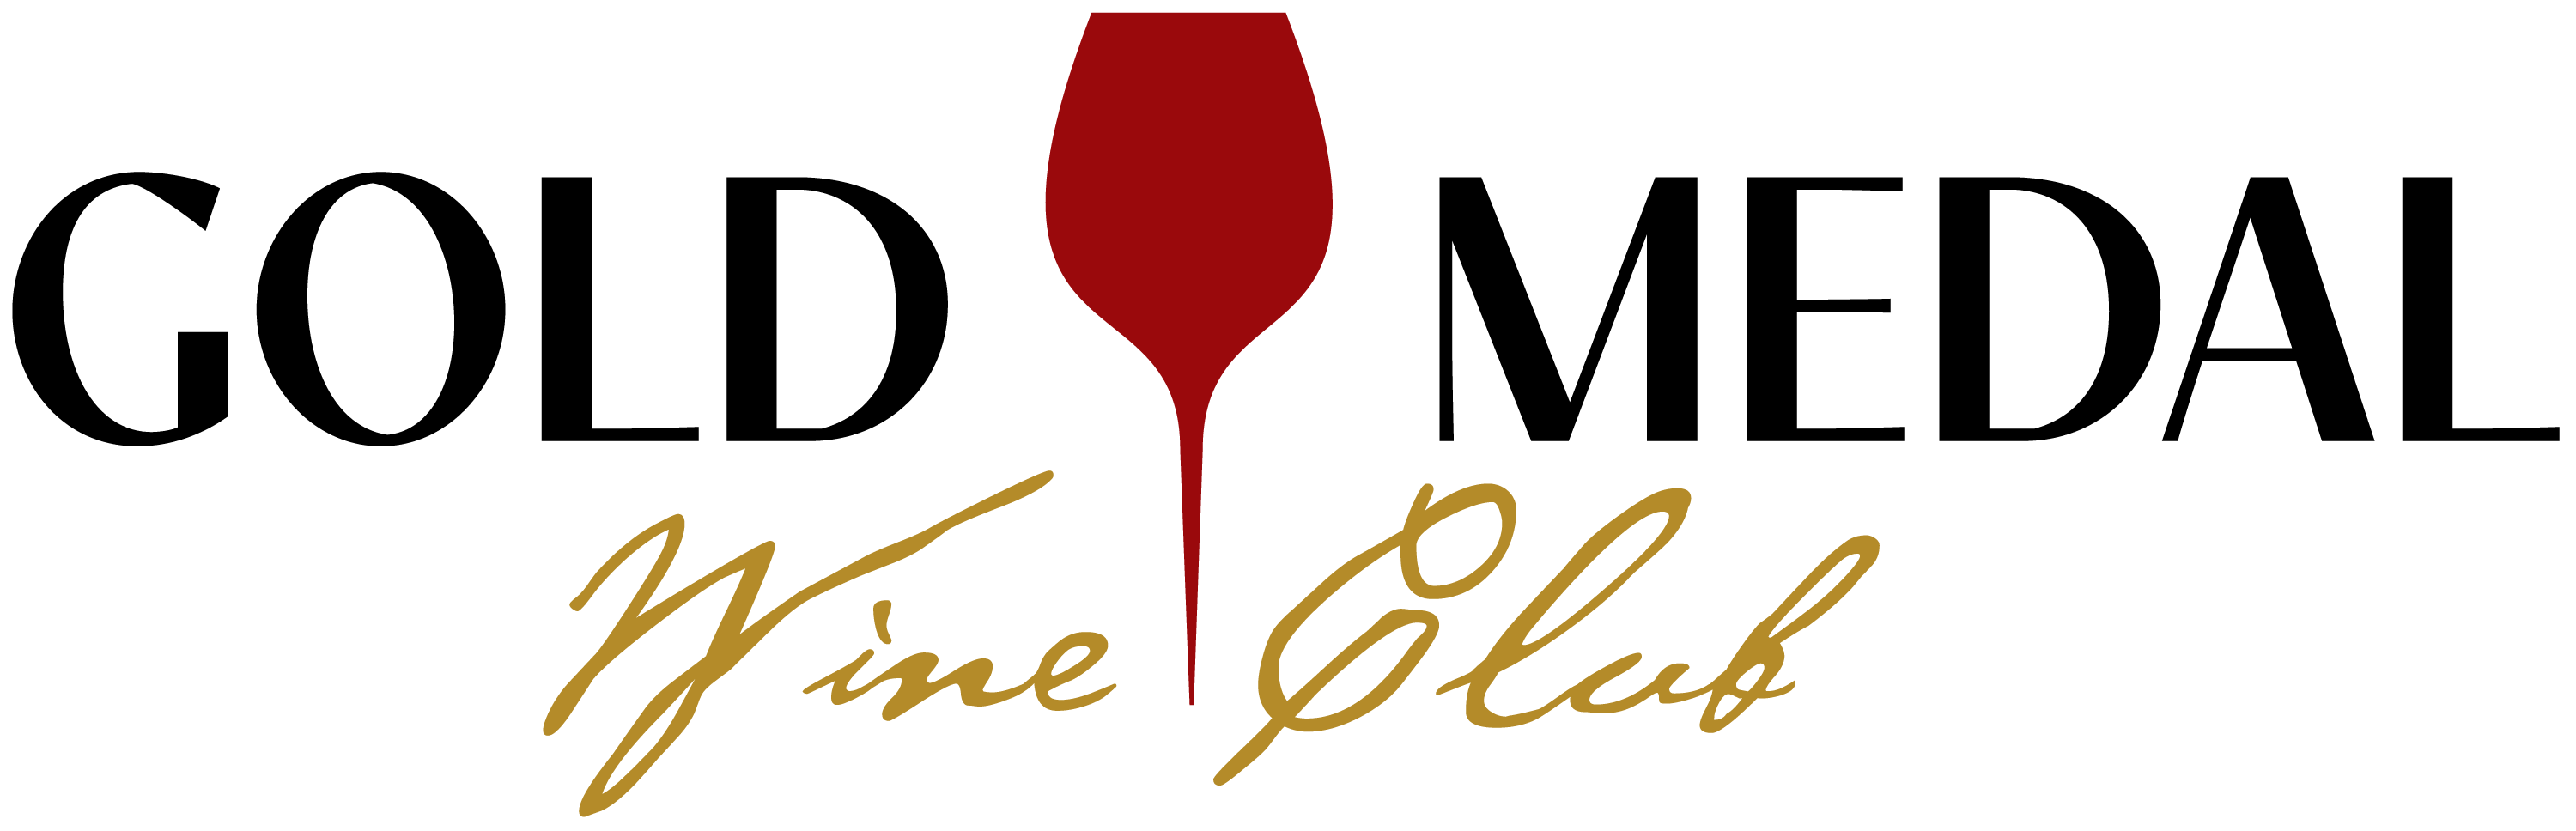 gold medal wine club logo